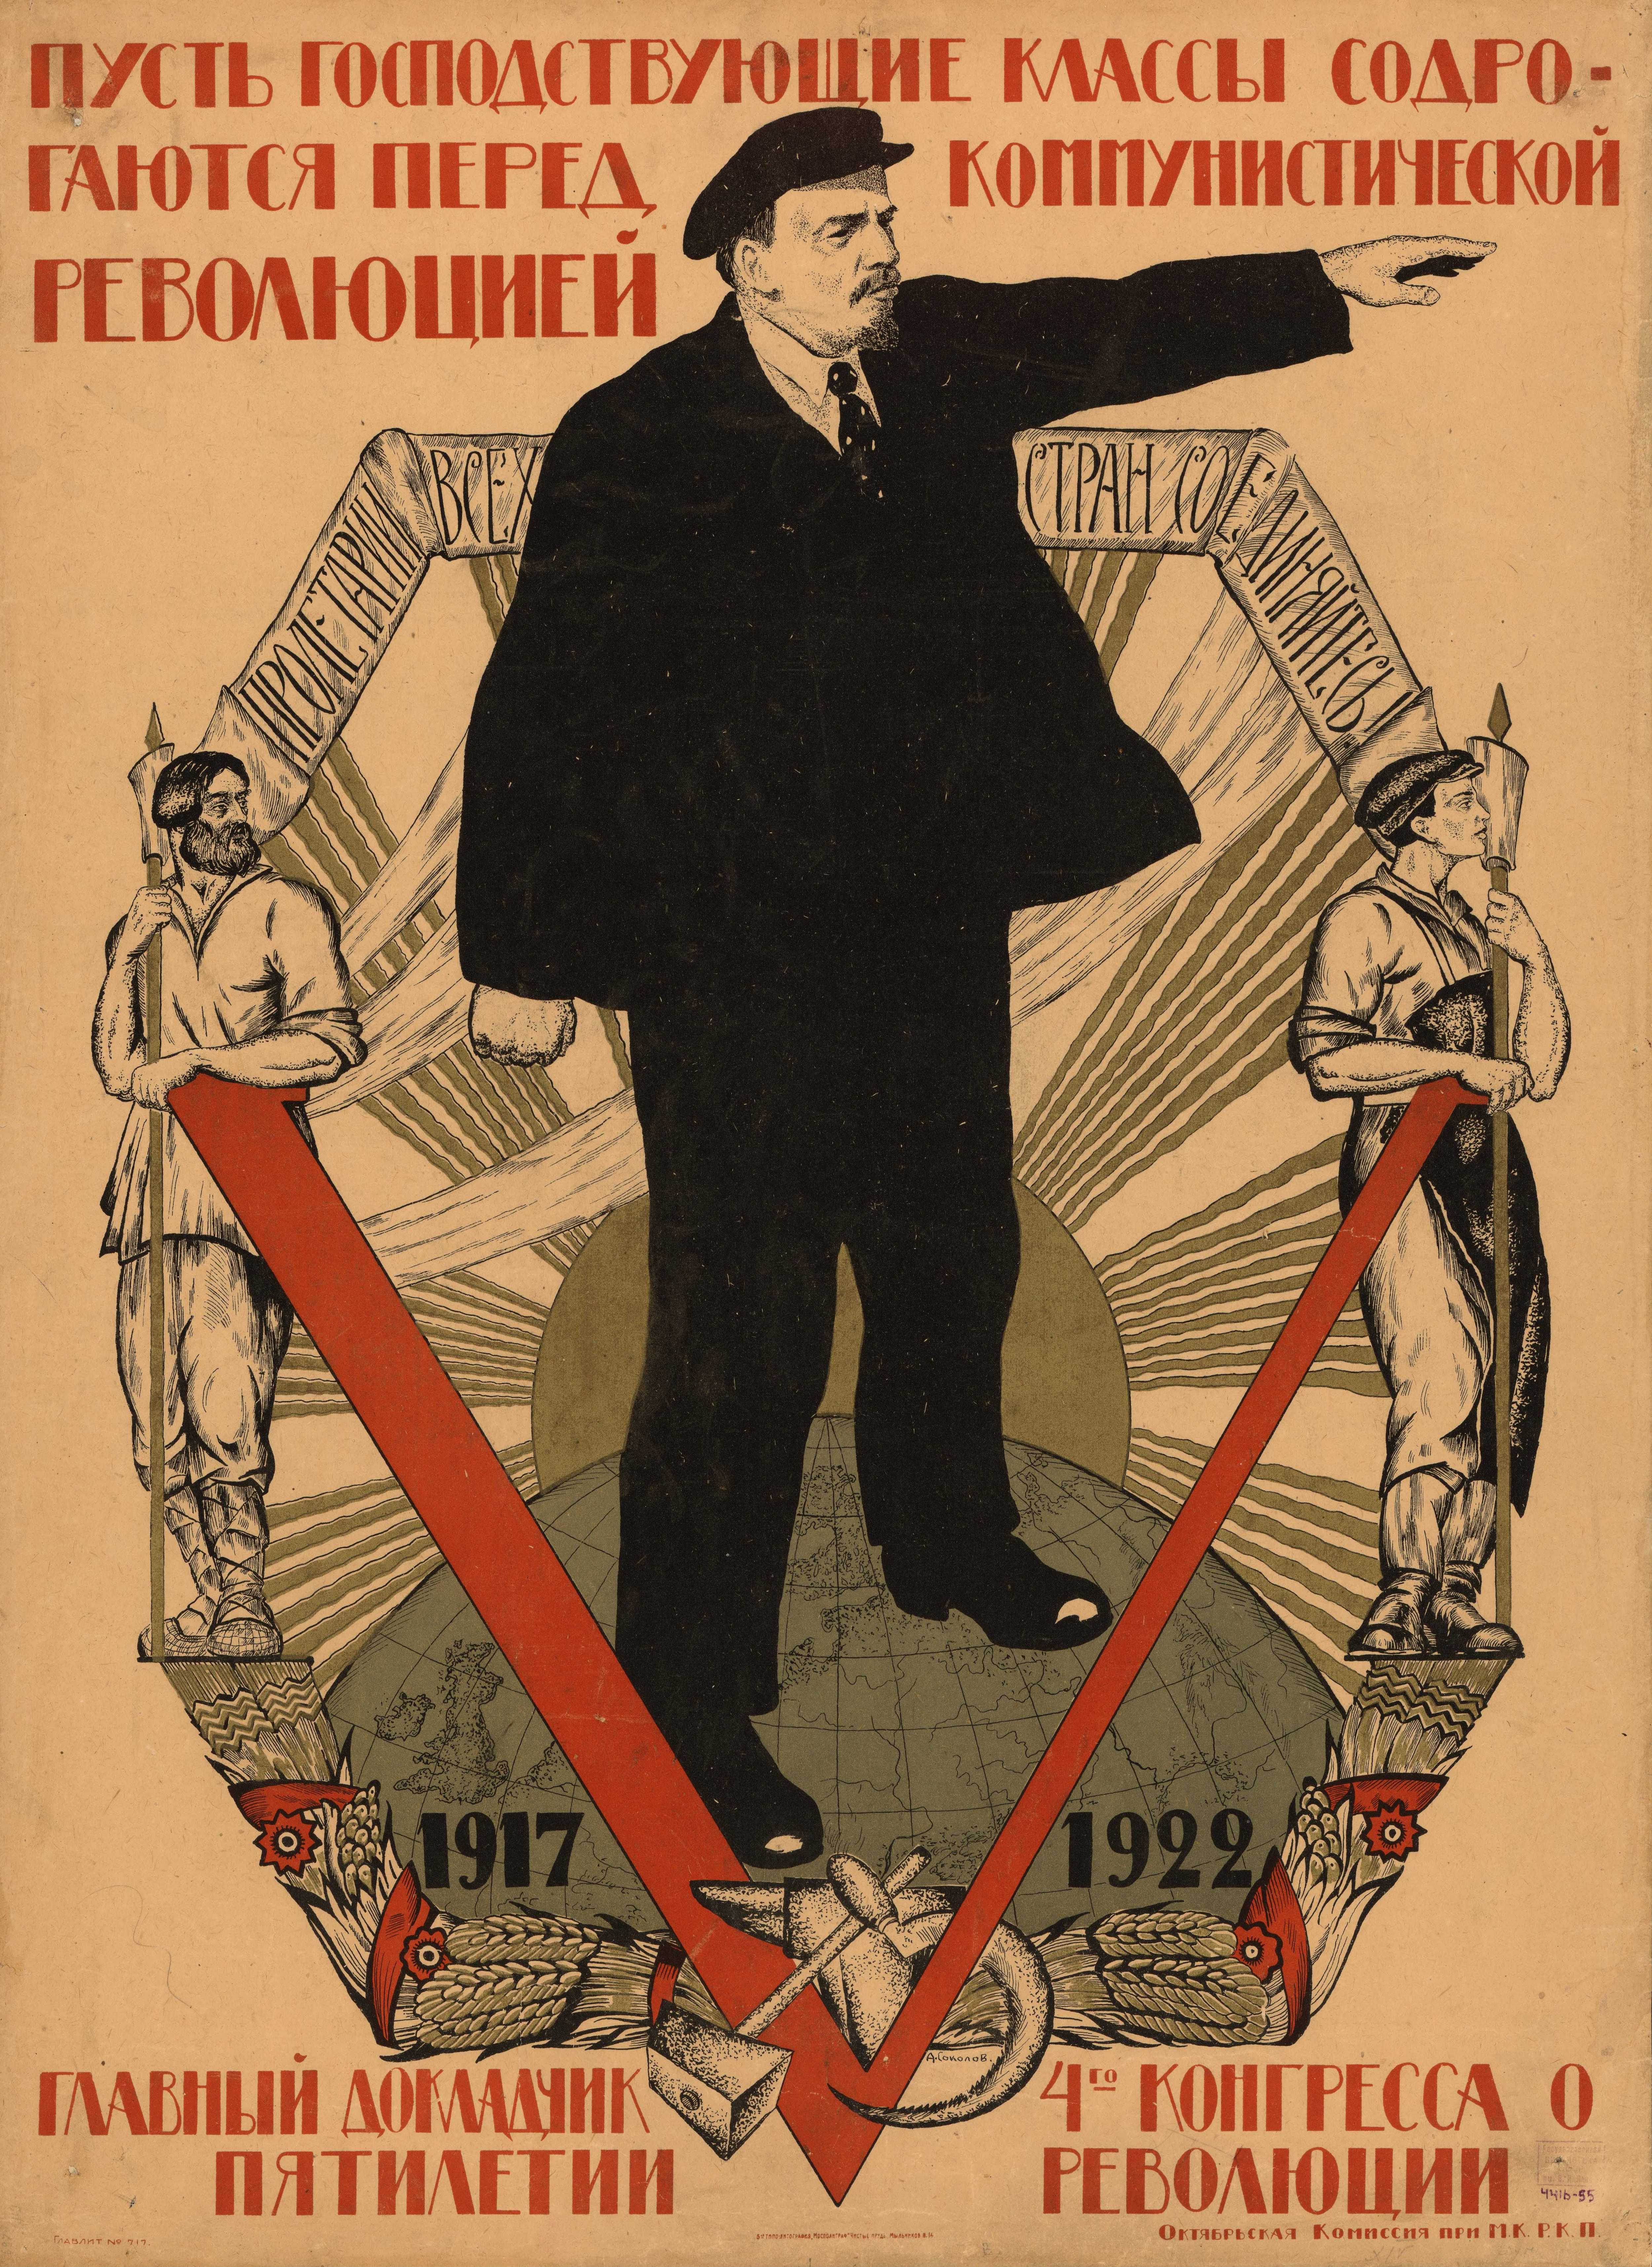 A. Соколов. Плакат. 1922. A. Sokolov. Cinq ans de la révolution.